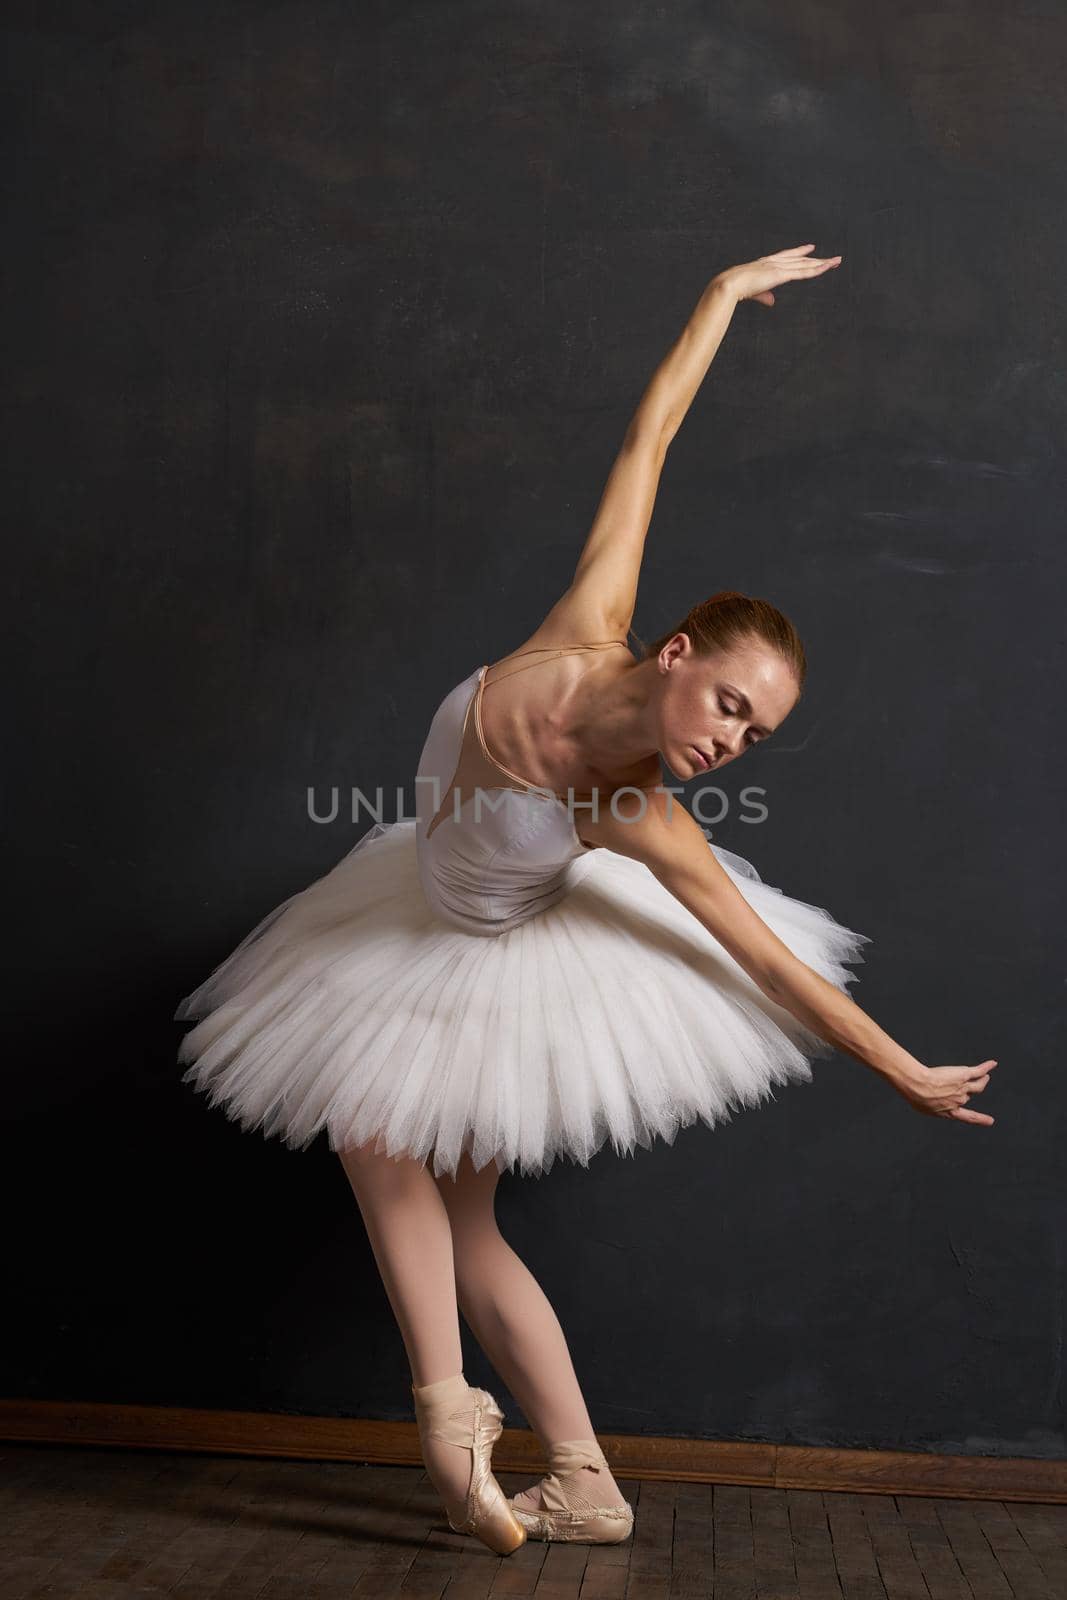 woman ballerina in a white tutu dance posing performance dark background. High quality photo